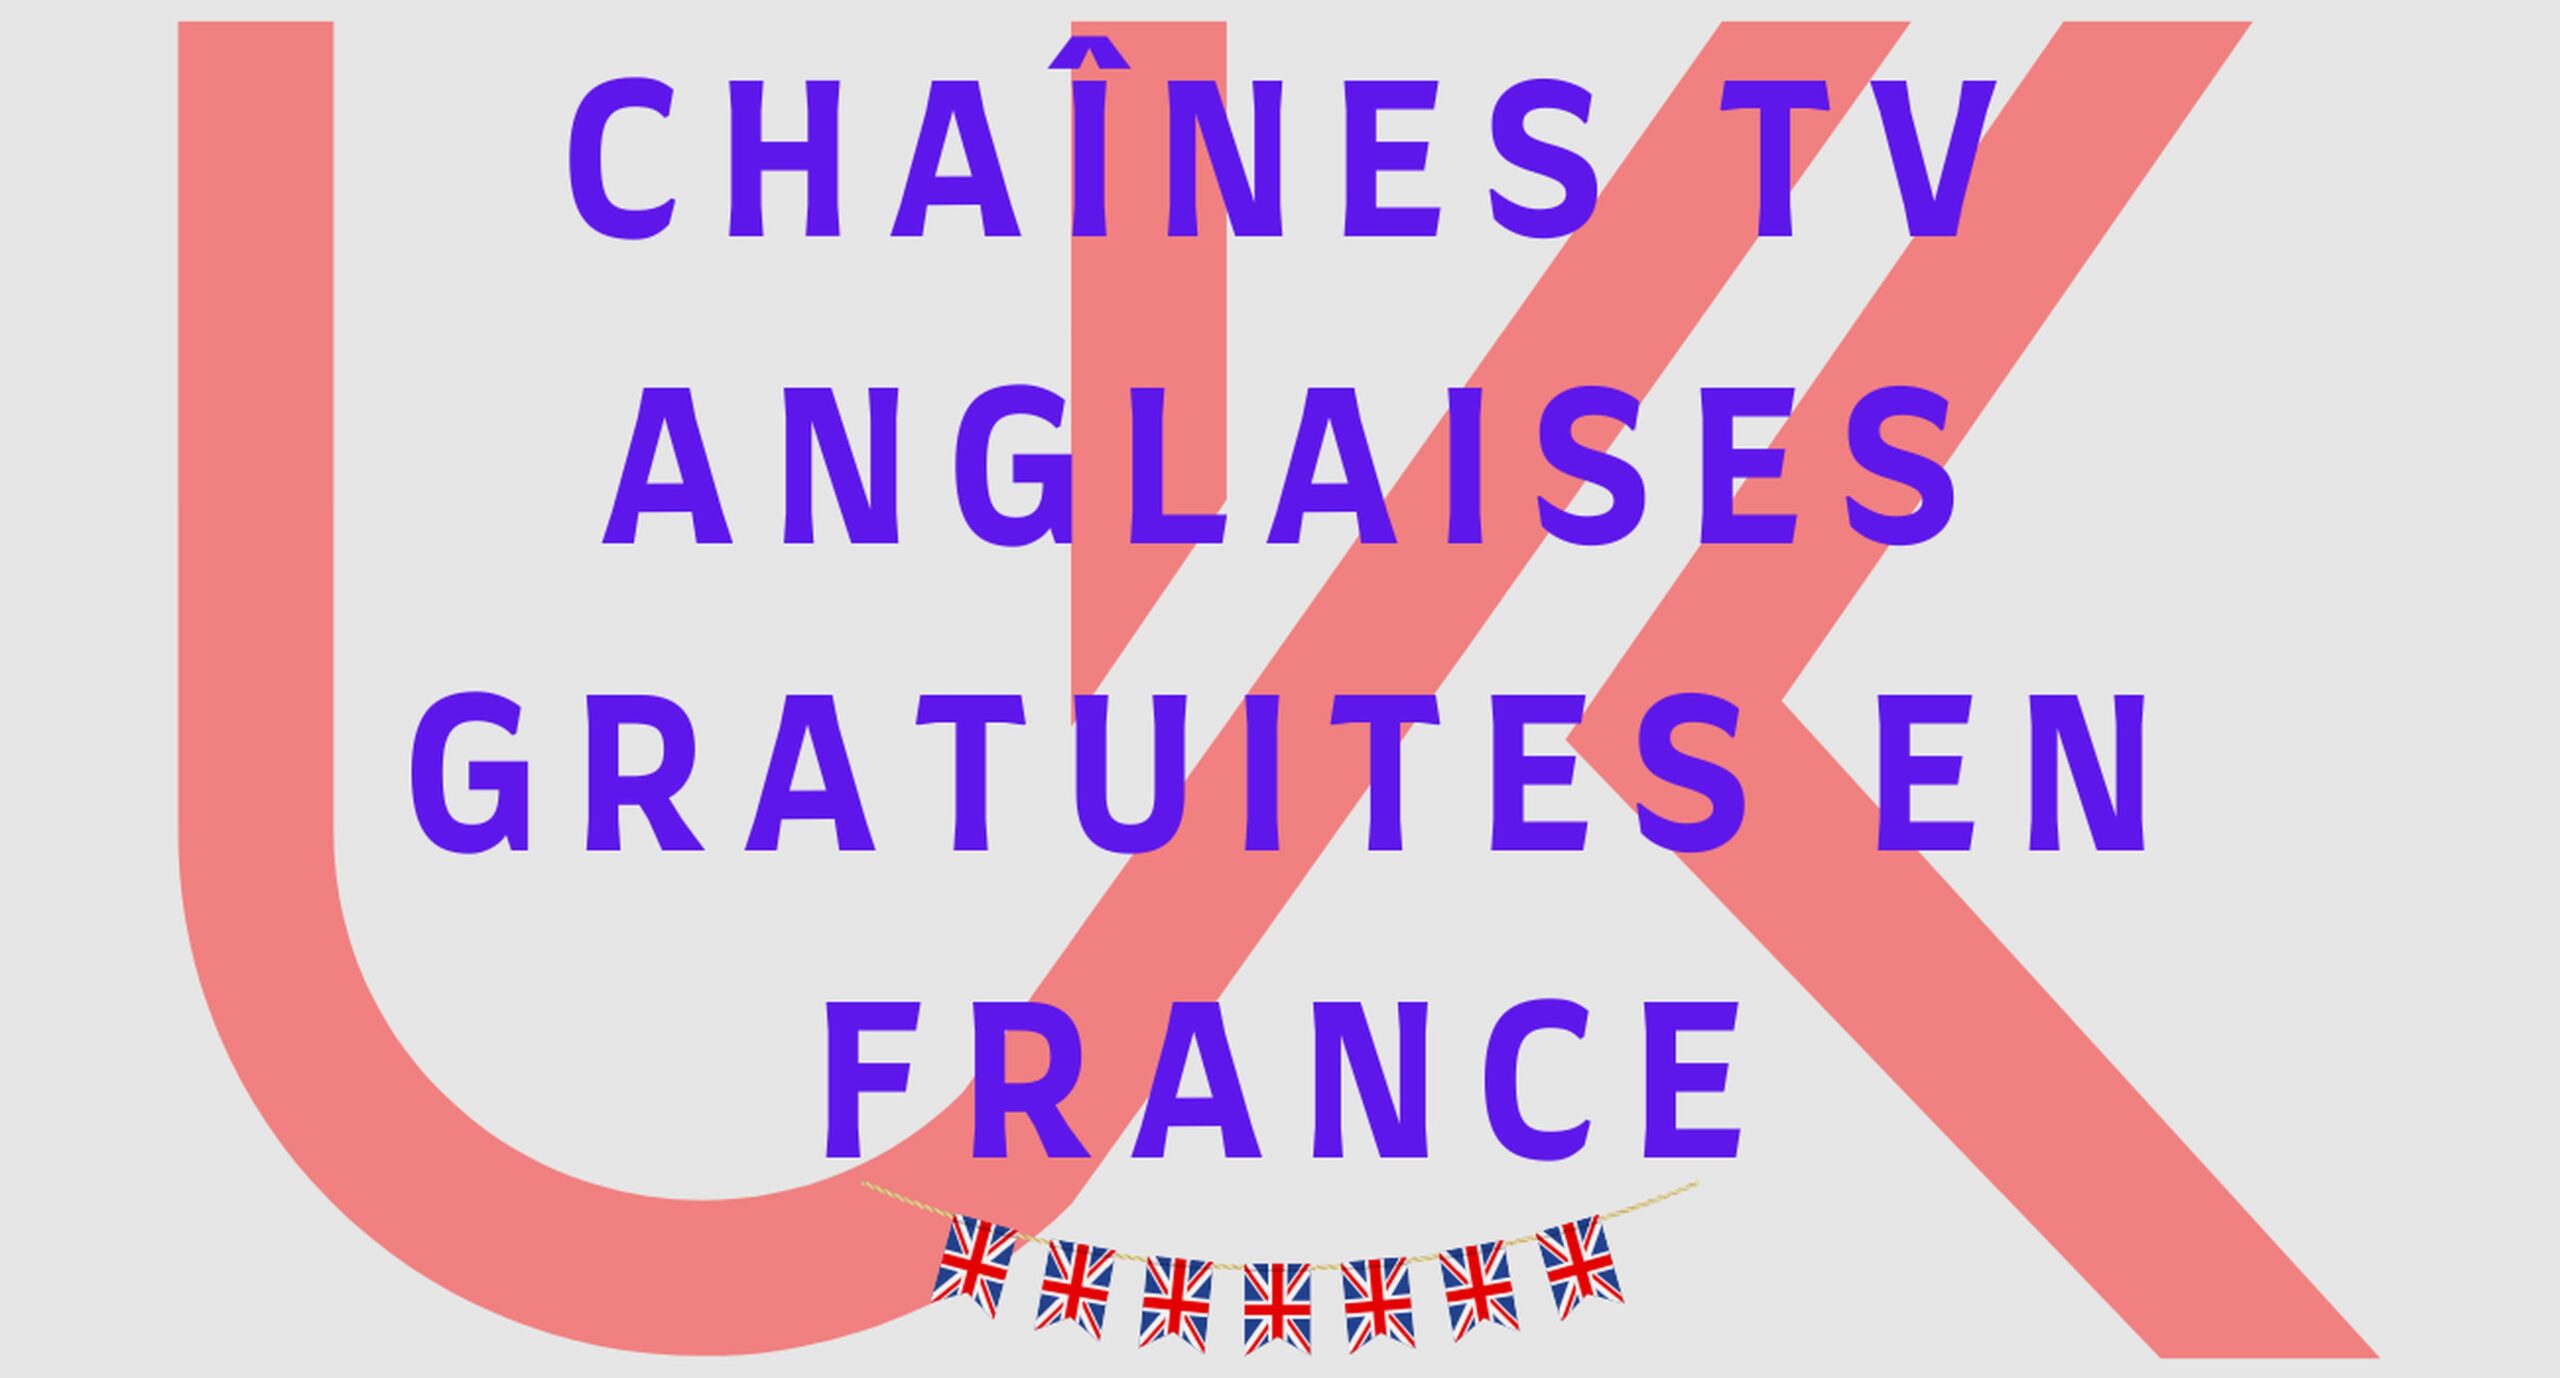 Chaînes TV Anglaises gratuites en France - 55 Chaînes TV disponibles 19